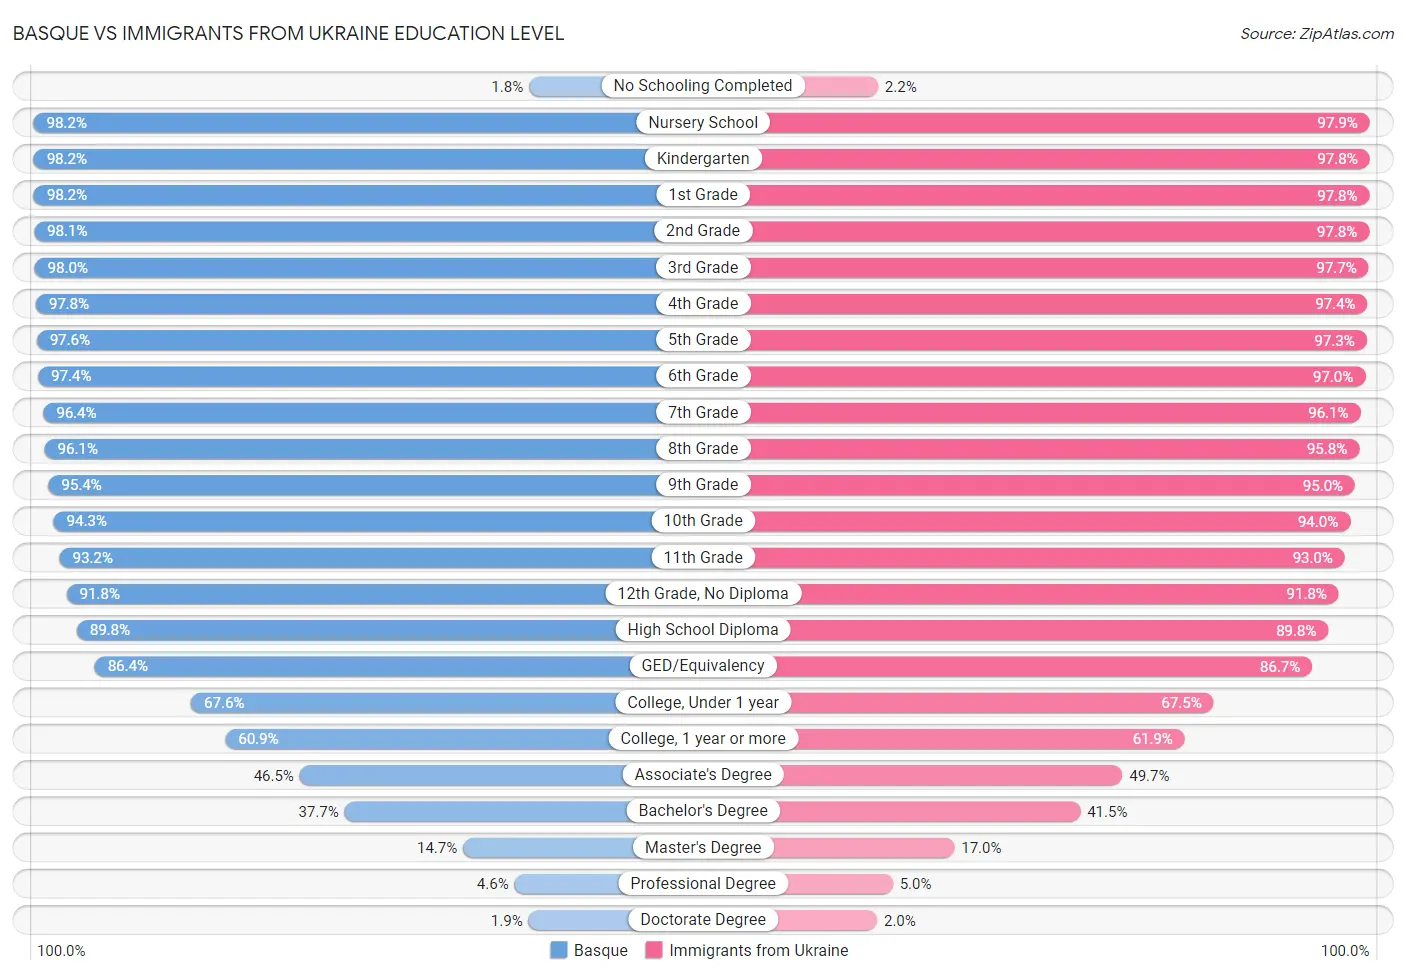 Basque vs Immigrants from Ukraine Education Level